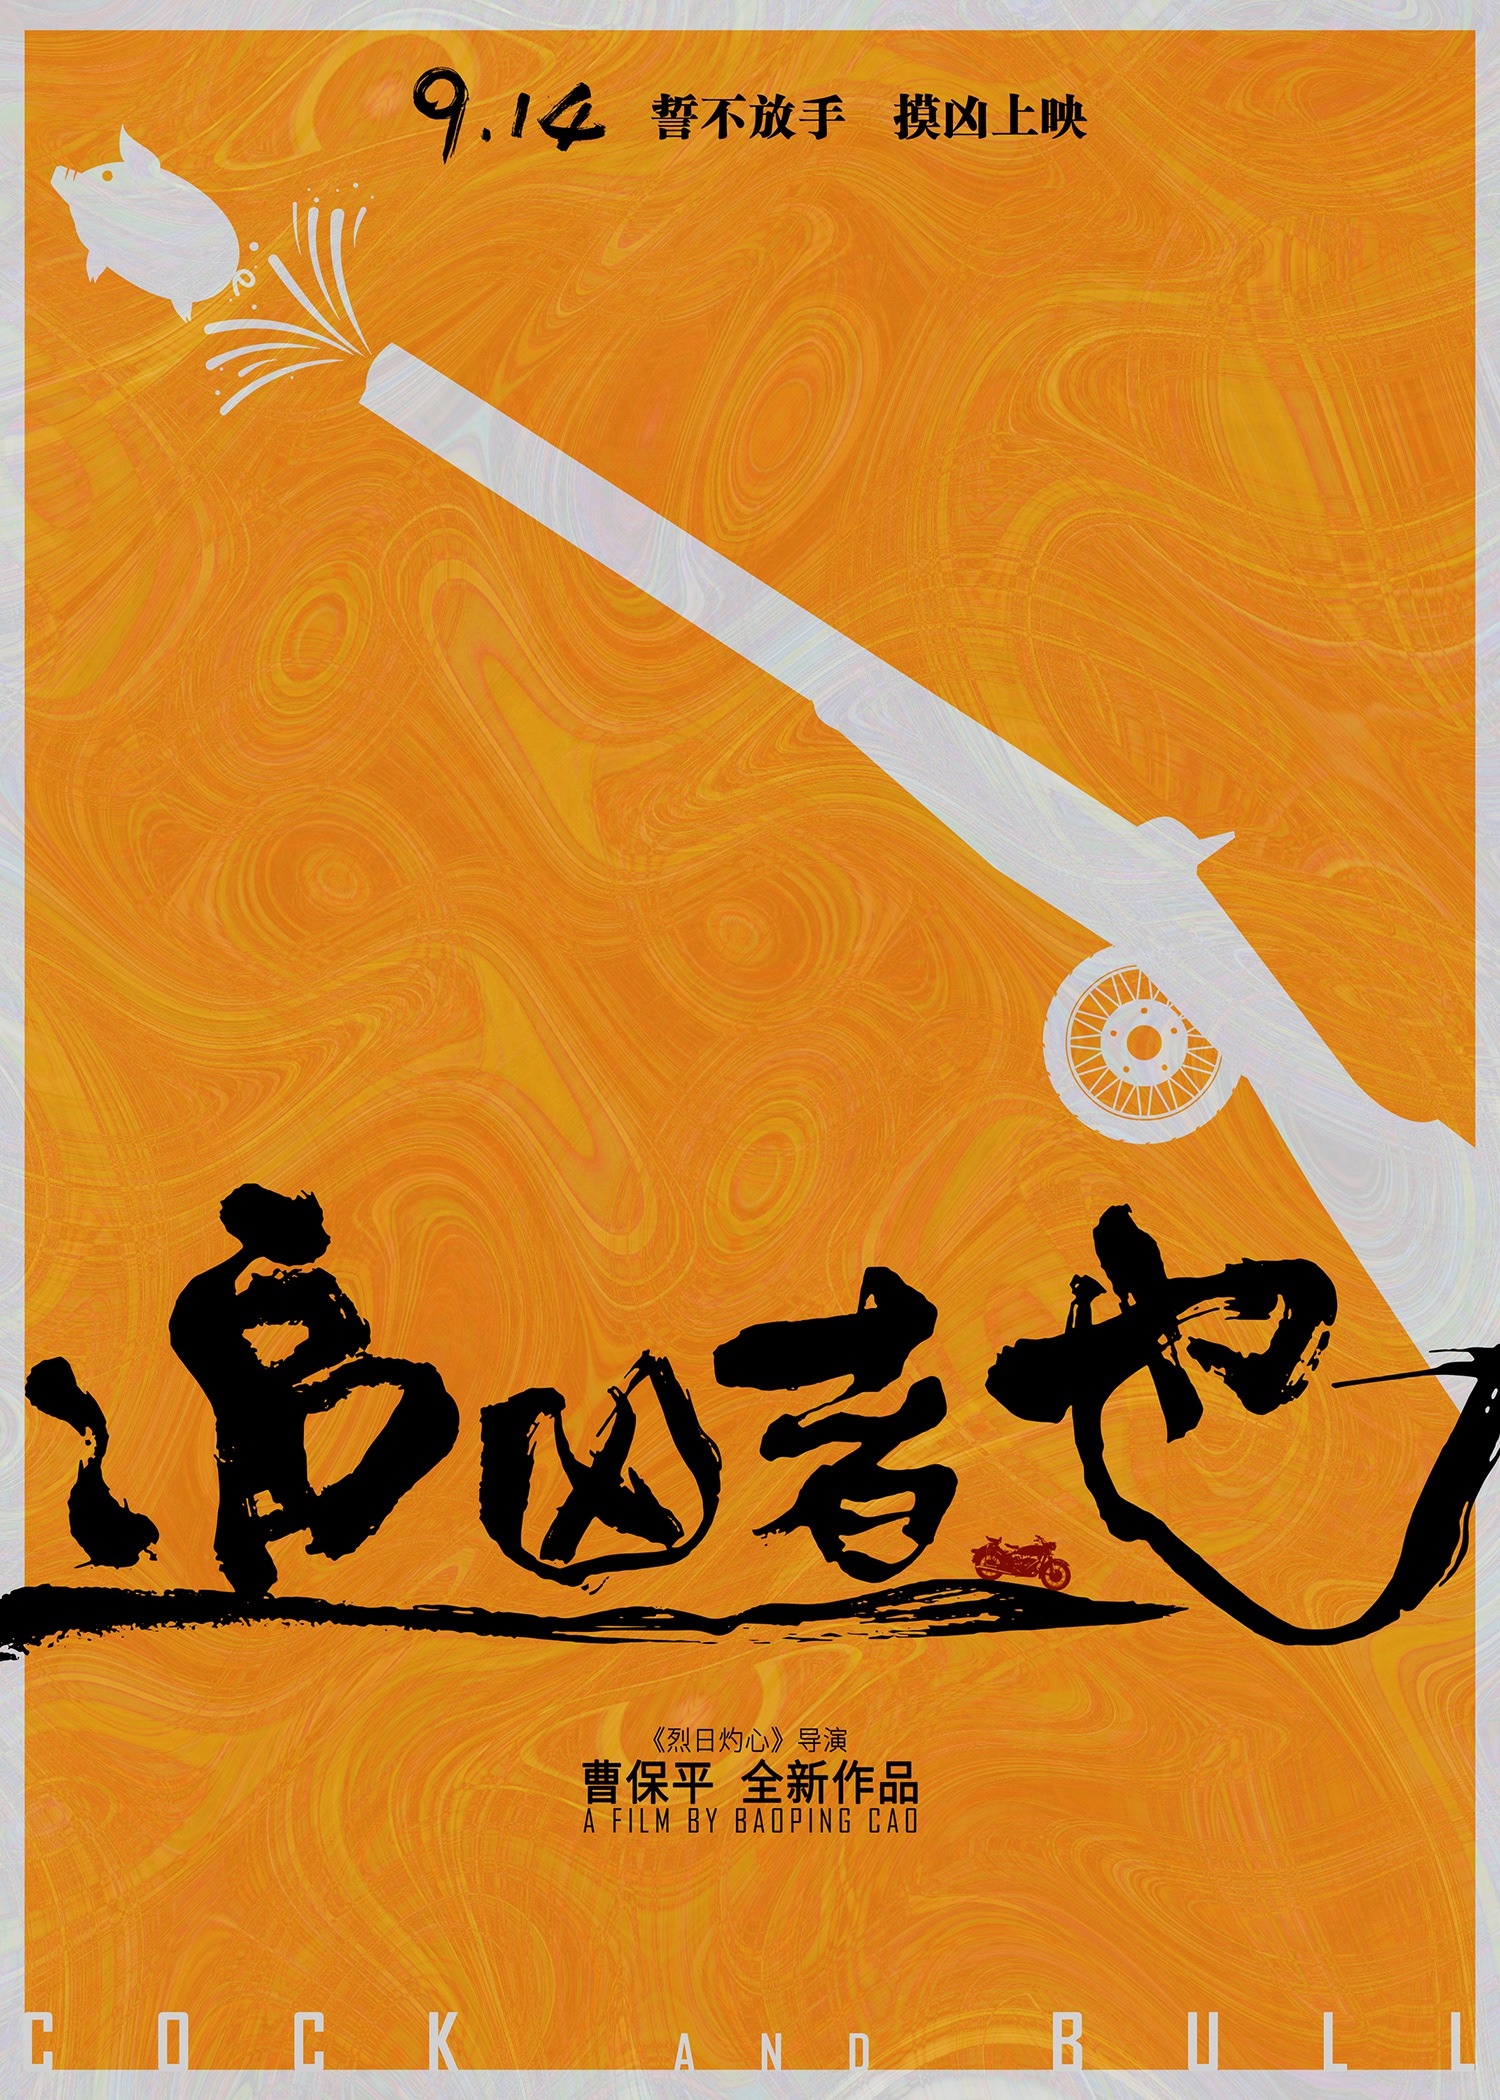 Mega Sized Movie Poster Image for Zhui xiong zhe ye (#1 of 16)